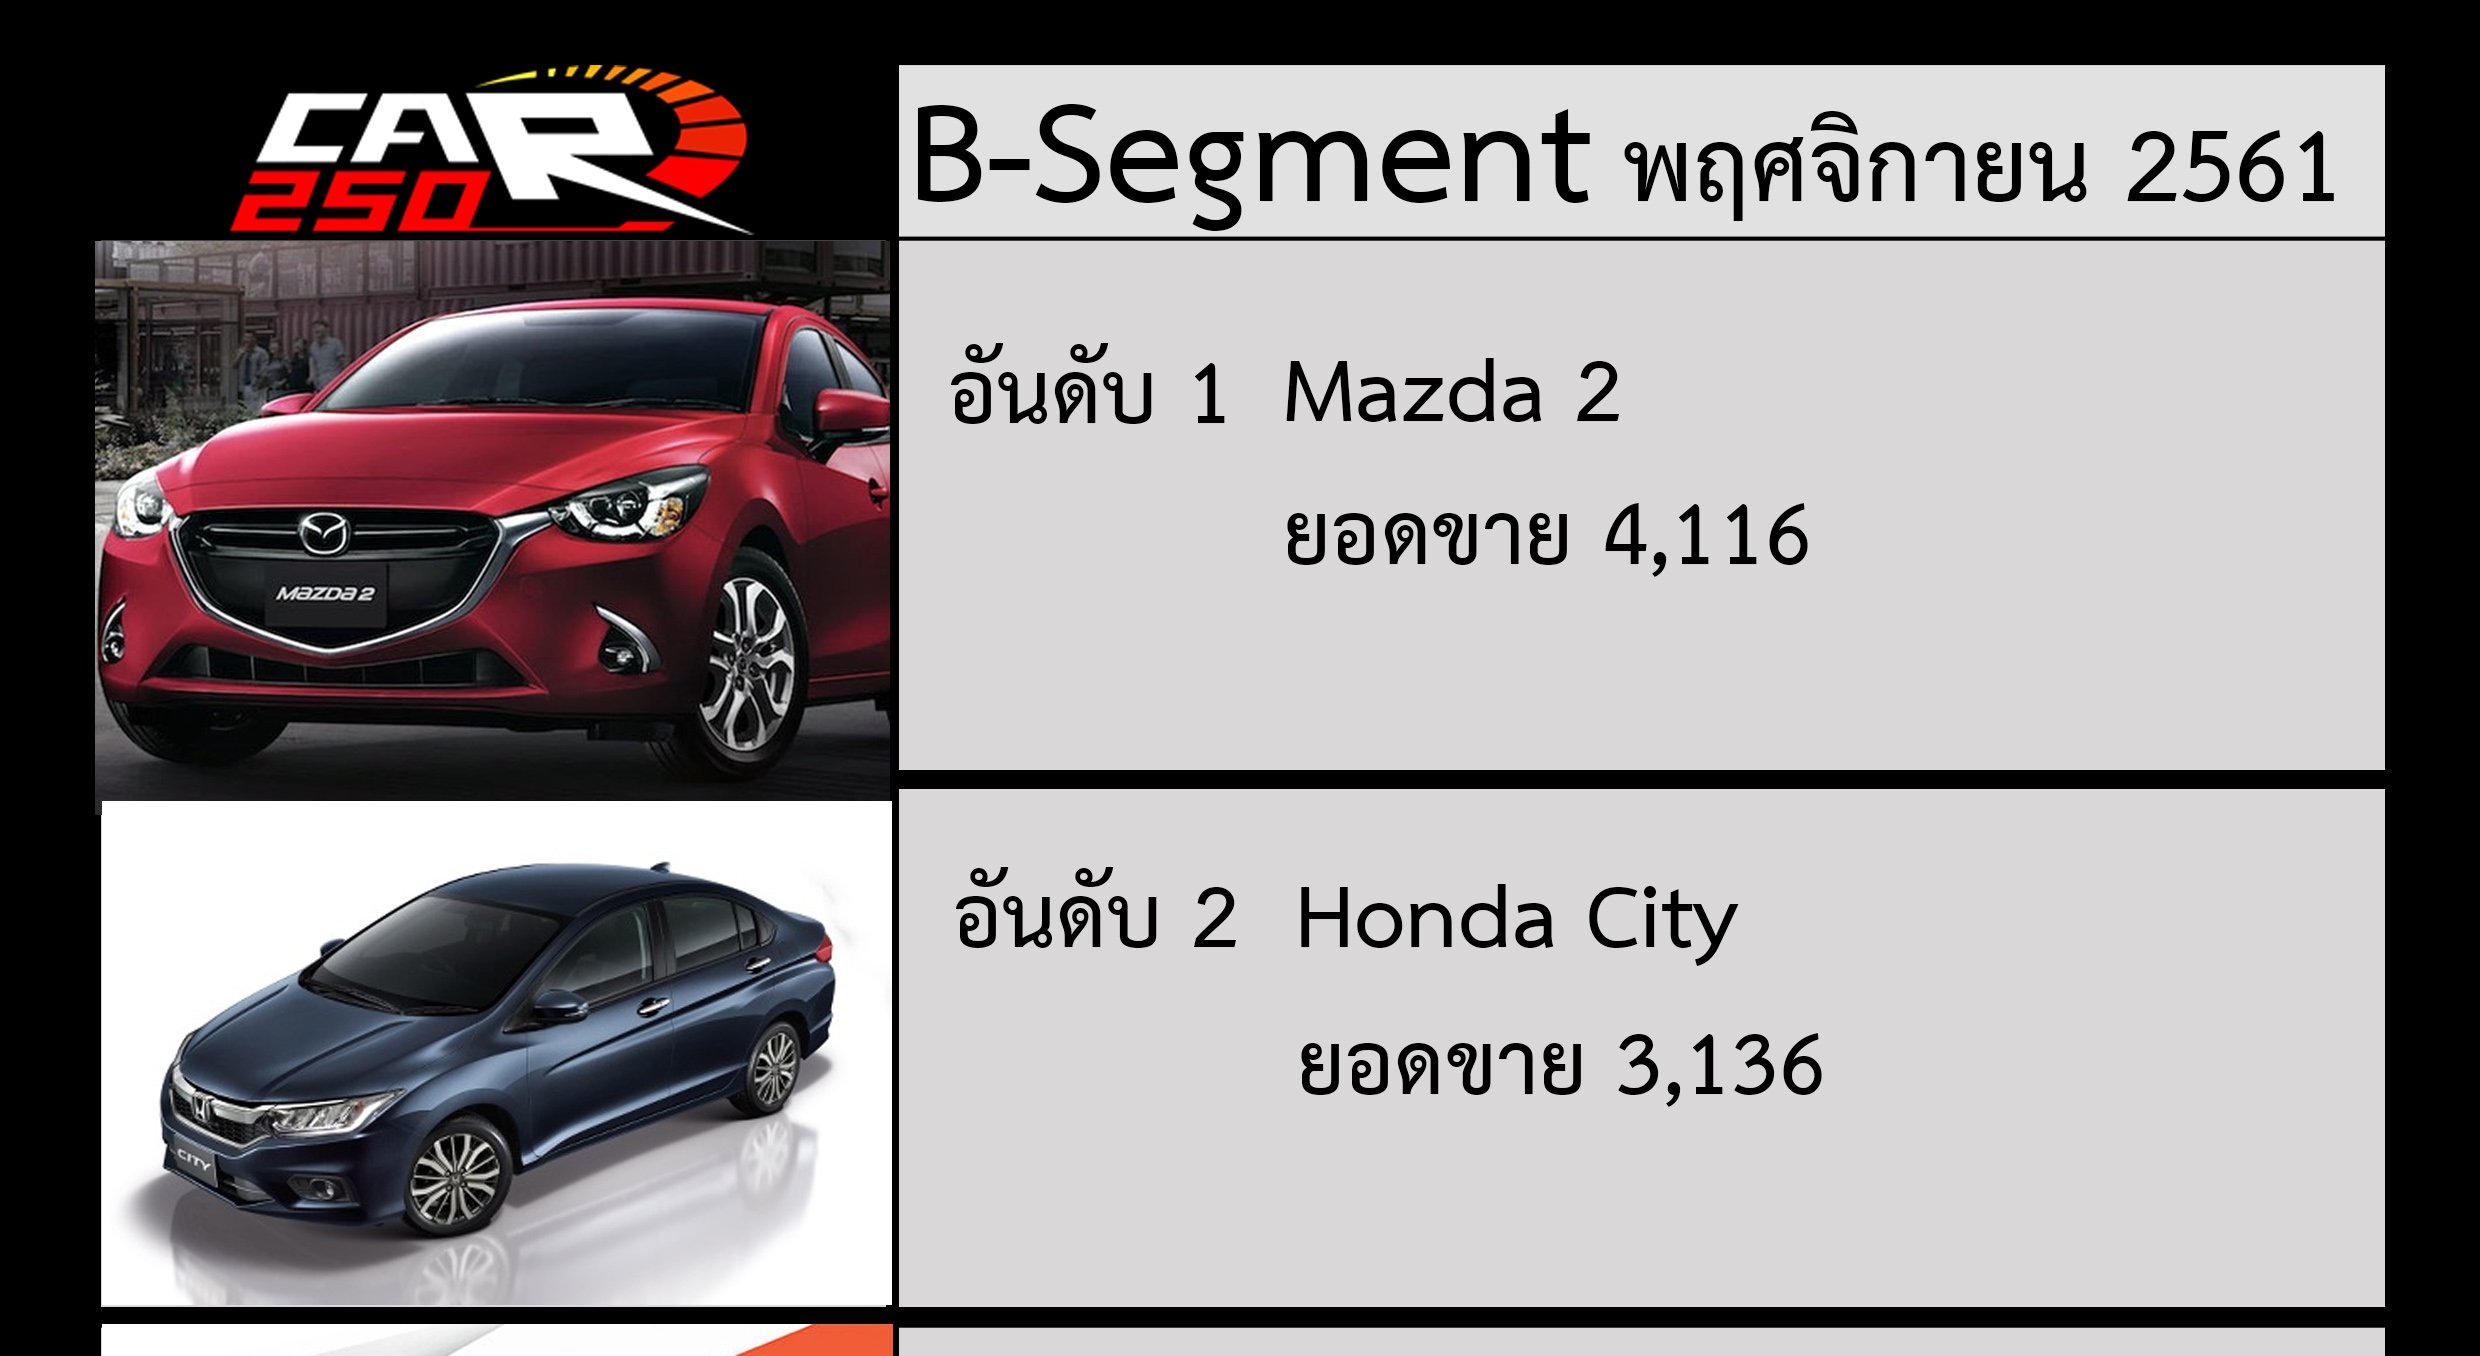 Mazda2 ยอดขายอันดับ 1 ในกลุ่ม B-Segment พฤศจิกายน 2561